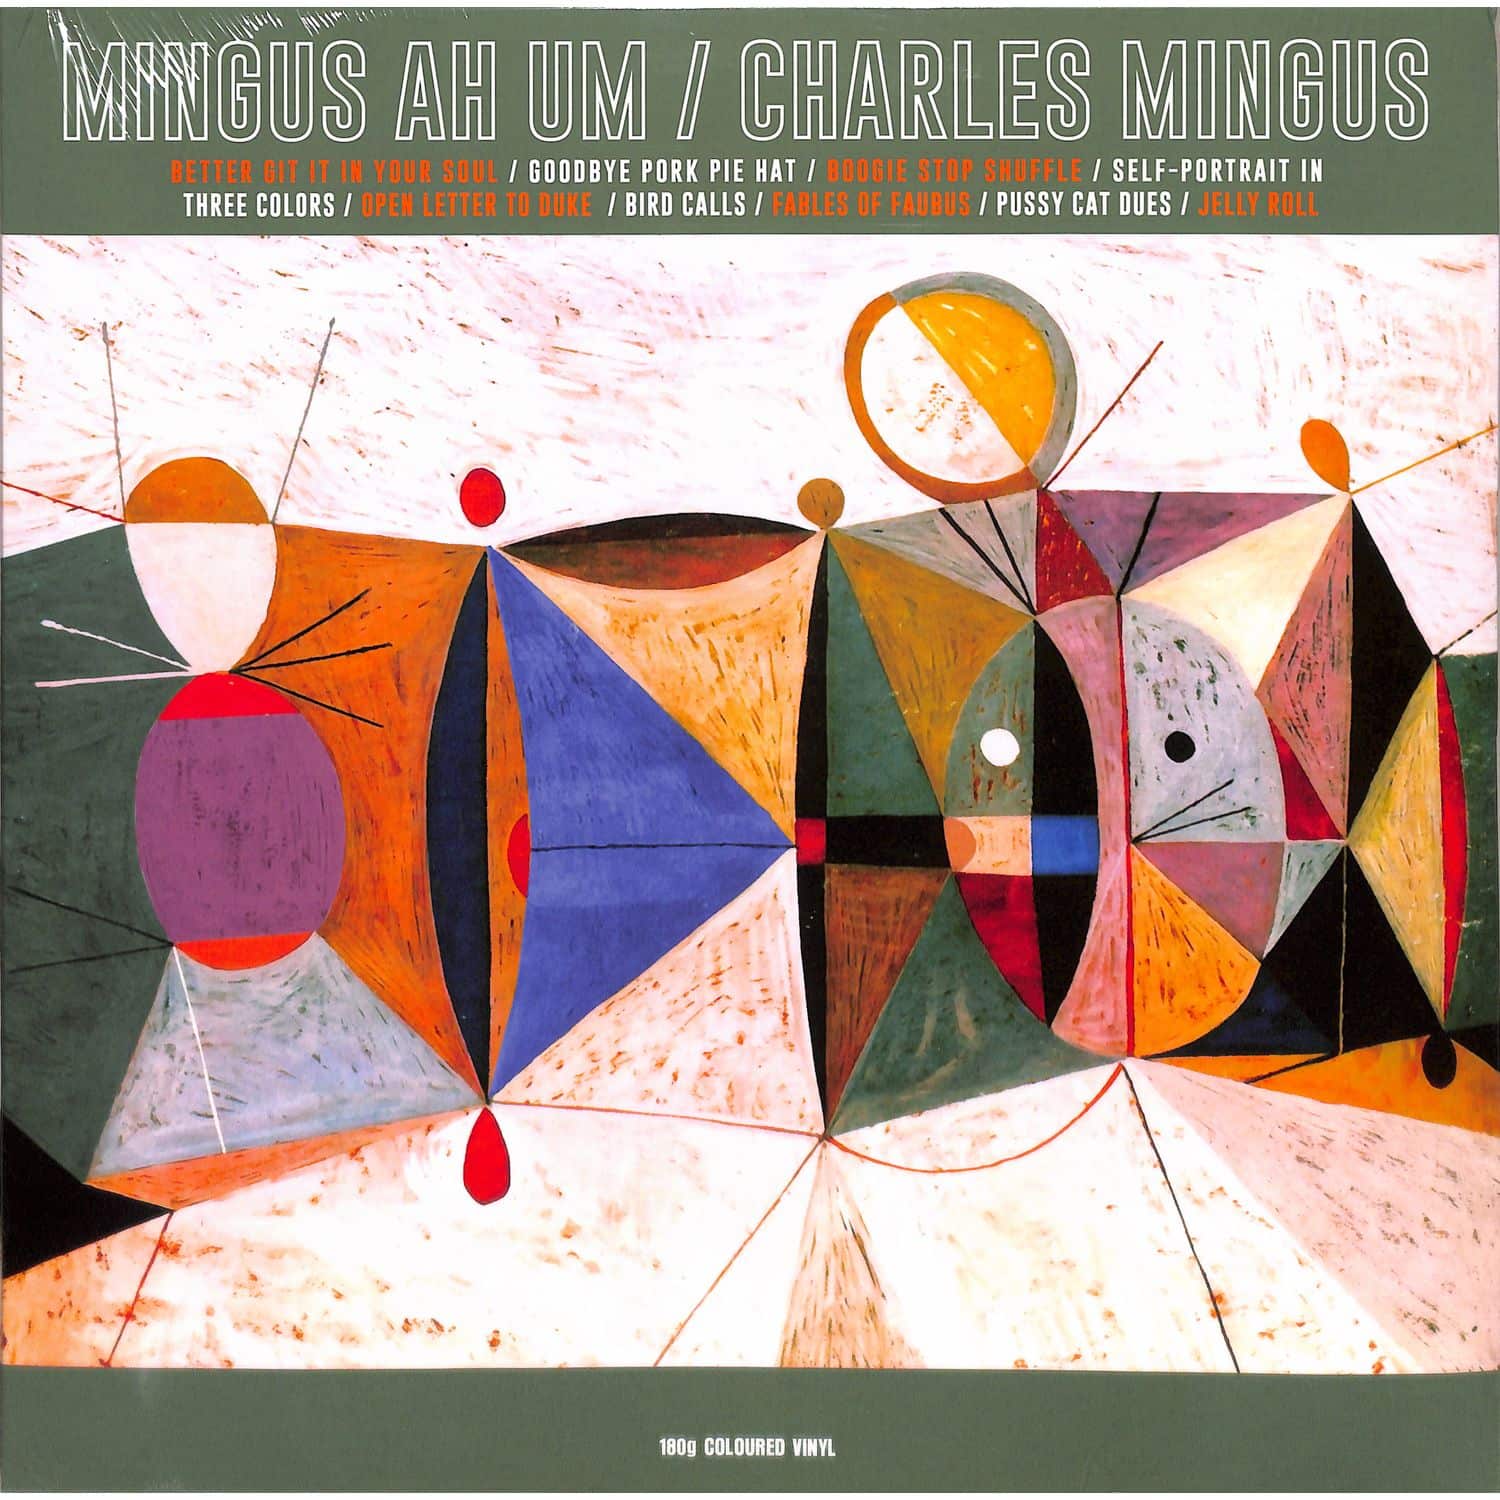  Charles Mingus - MINGUS AH UM 